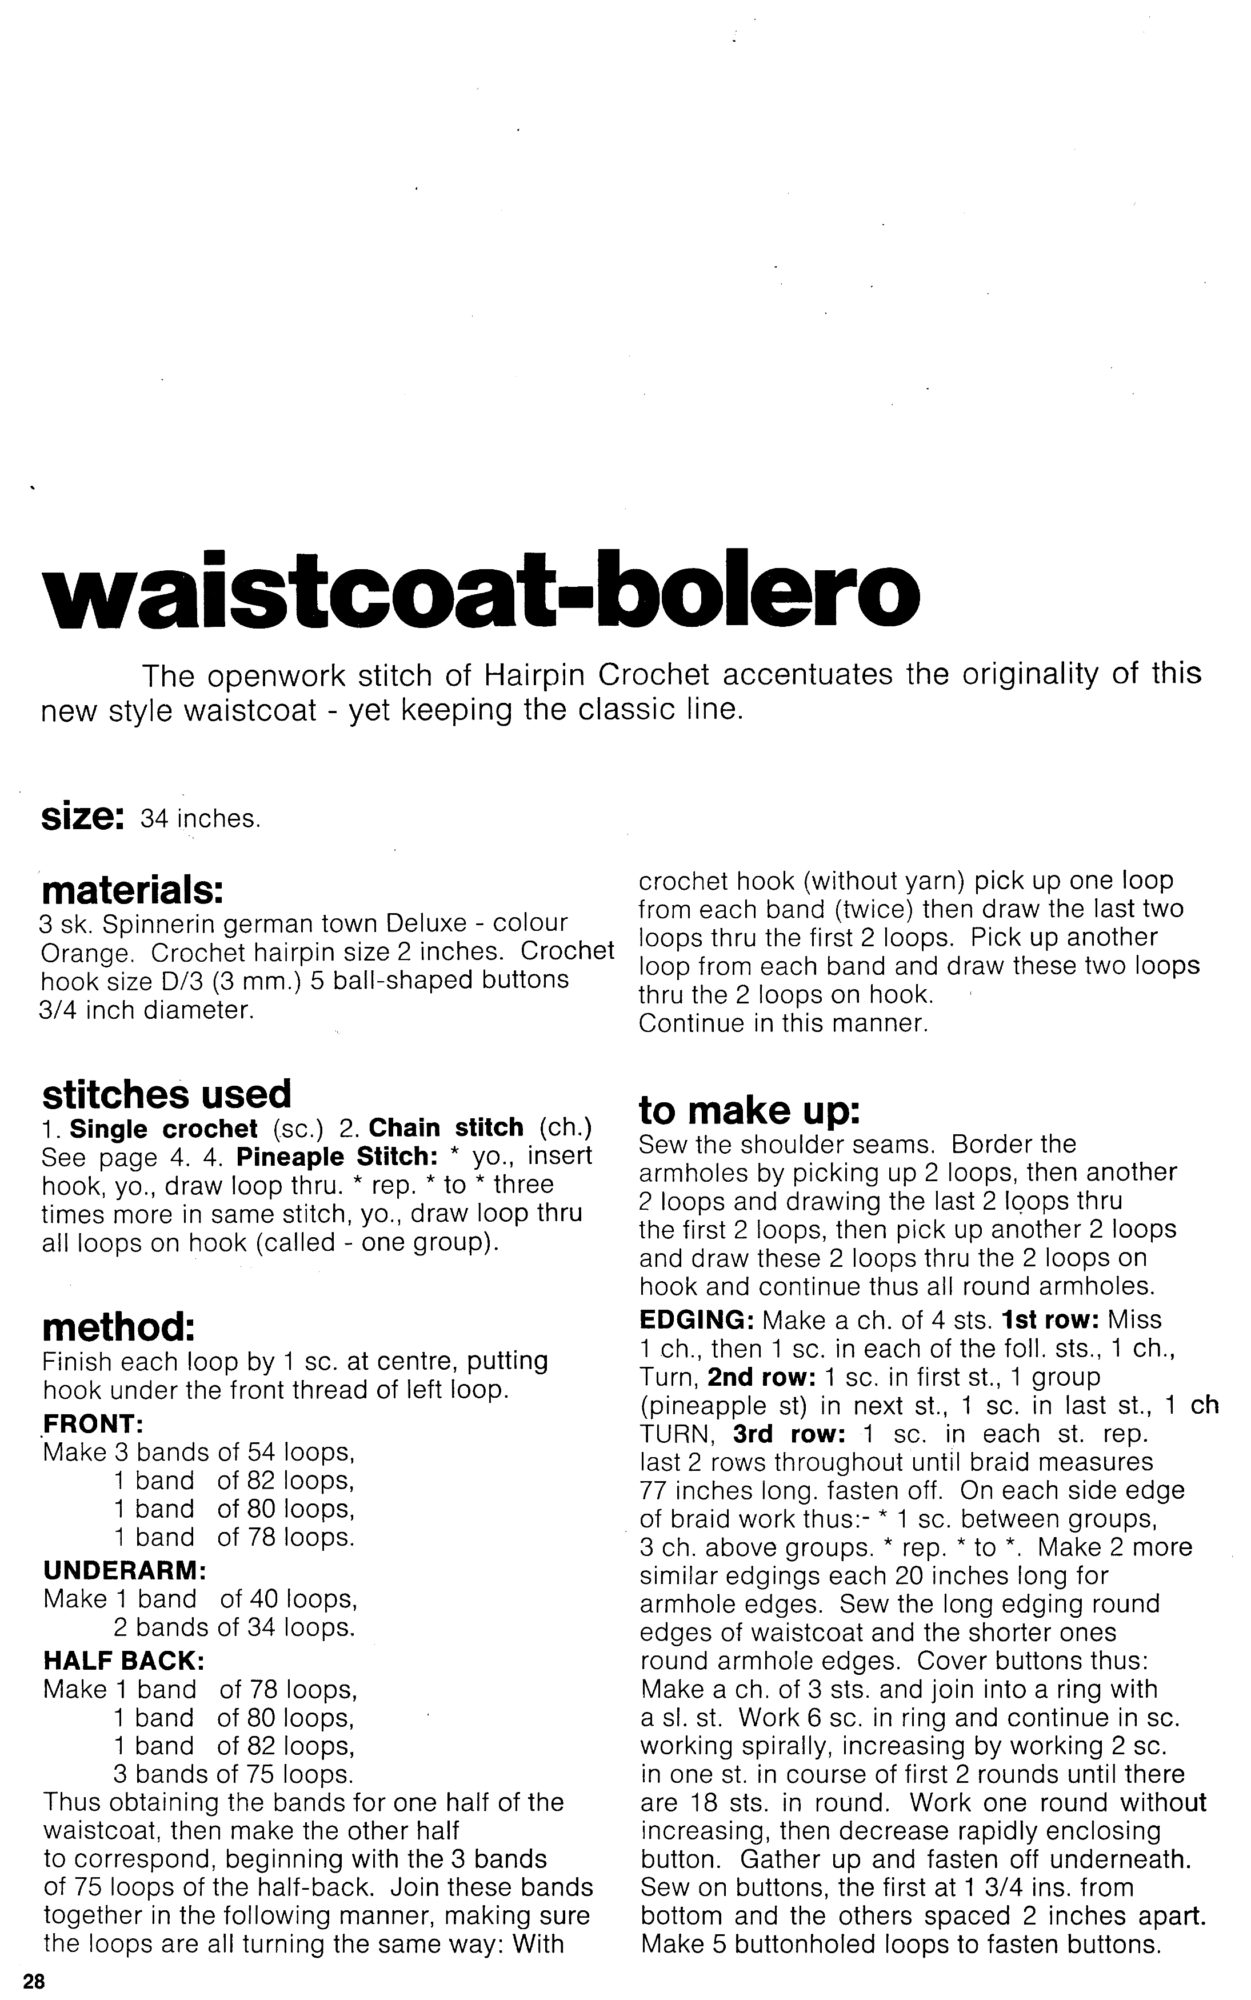 waistcoat bolero maltese lace hairpin crochet